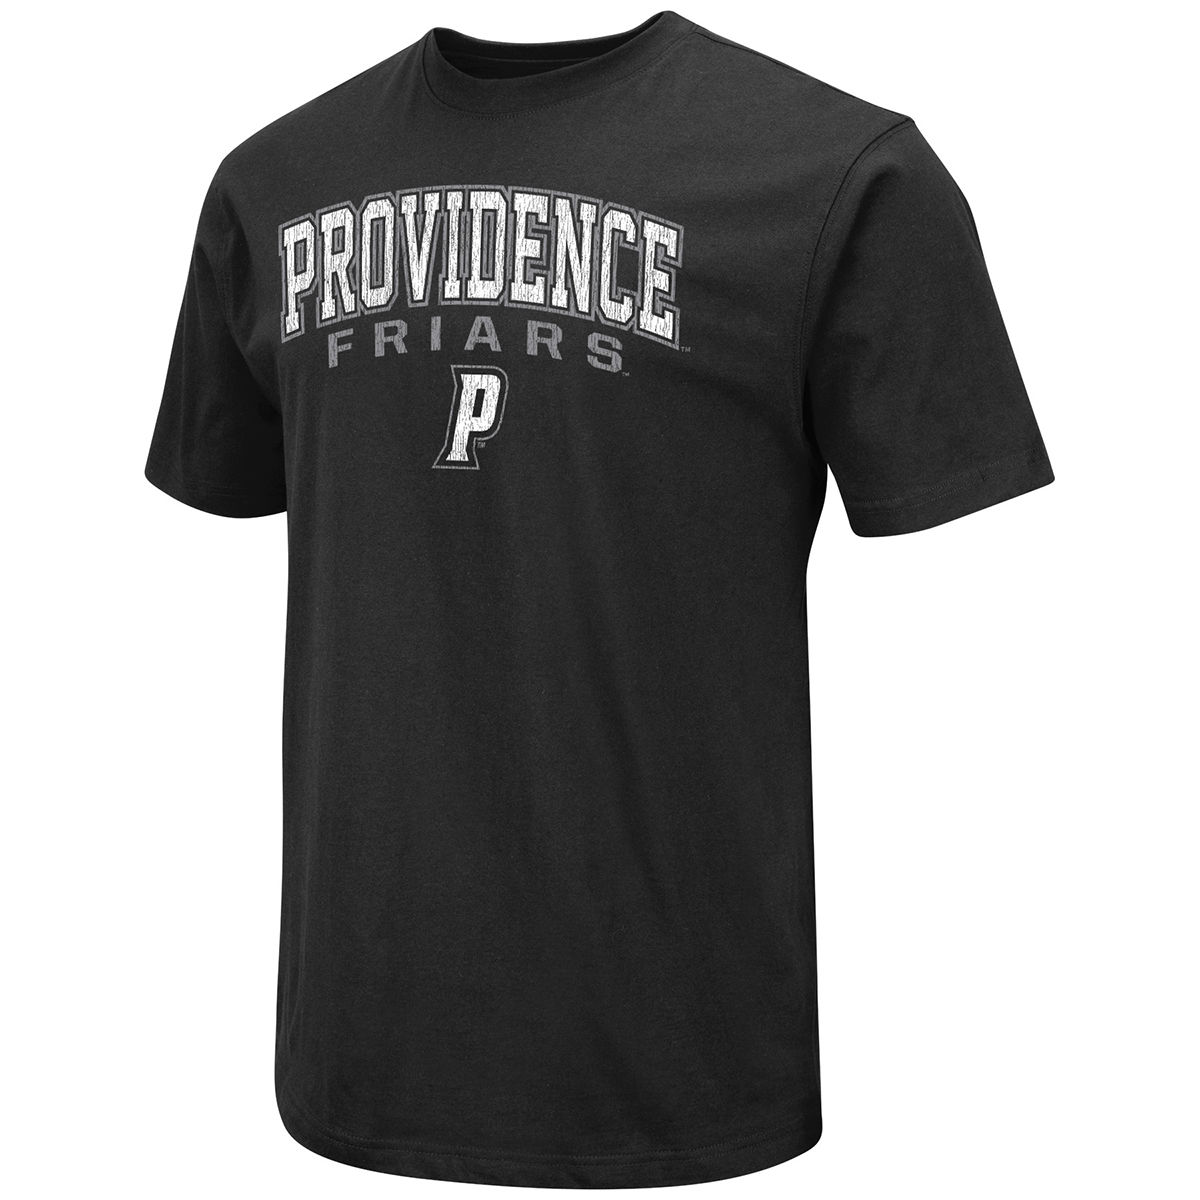 Providence College Men's Cotton Short-Sleeve Tee - Black, L